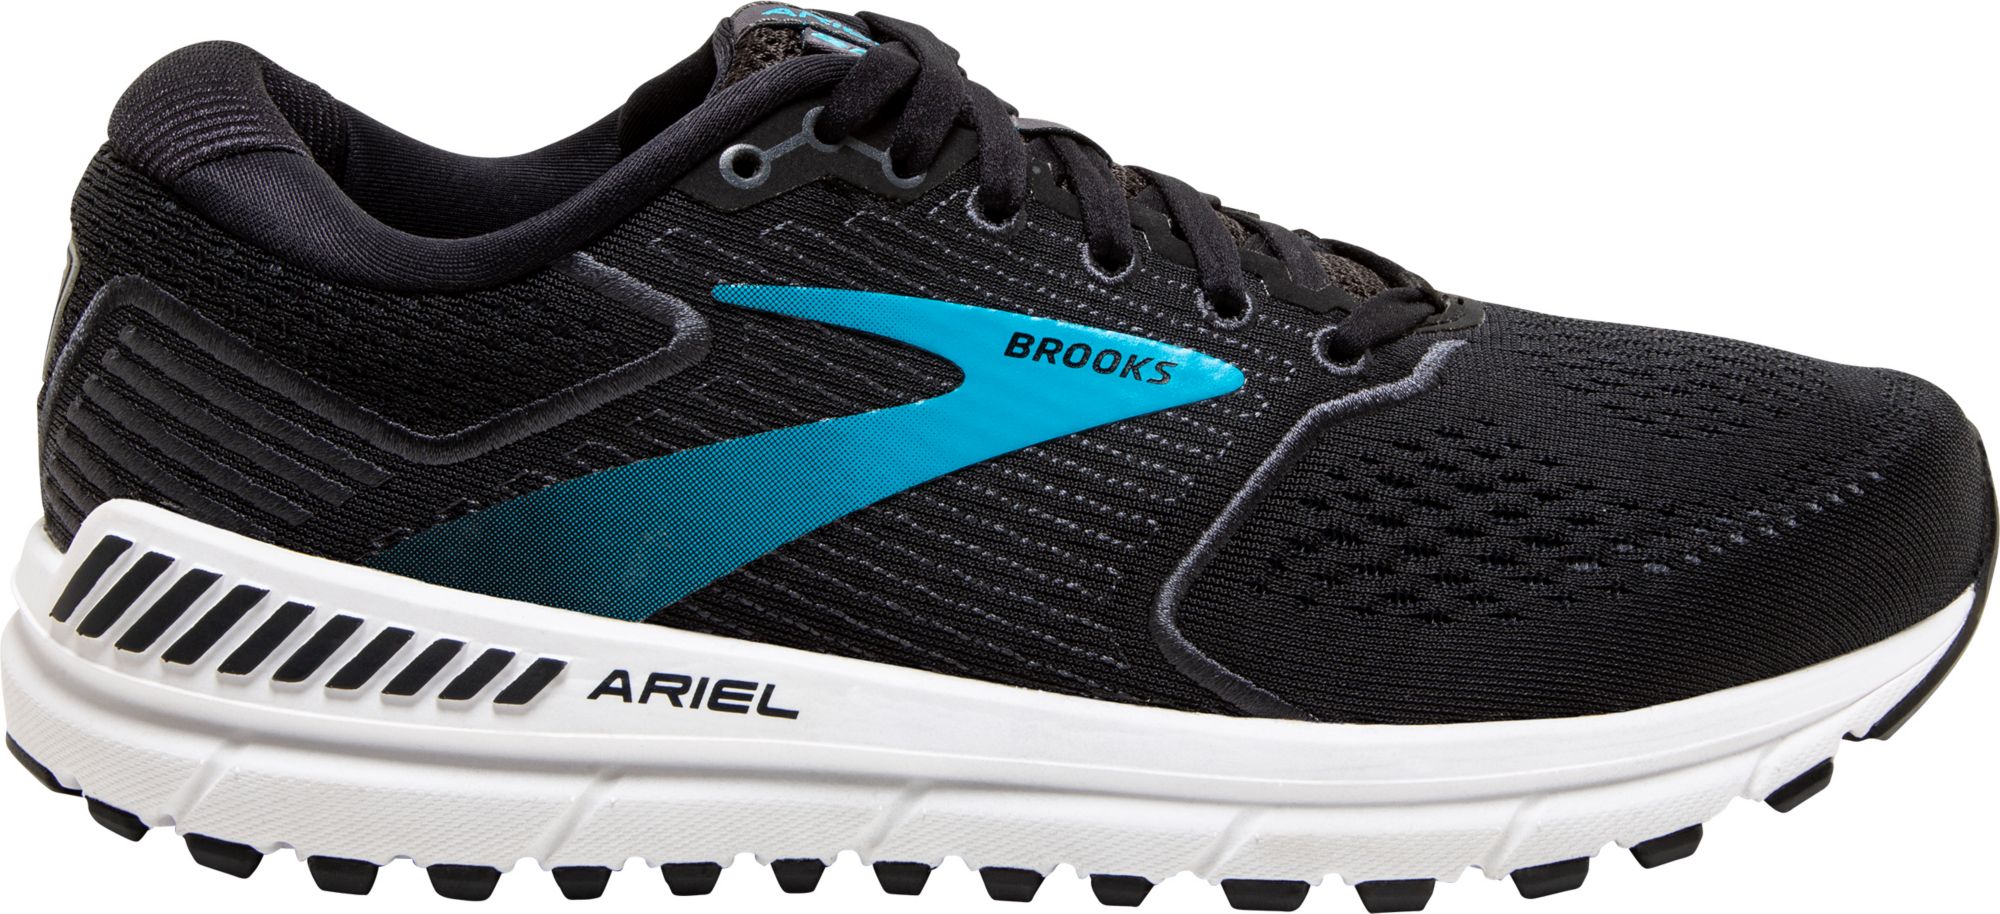 brooks ariel 12 running shoe